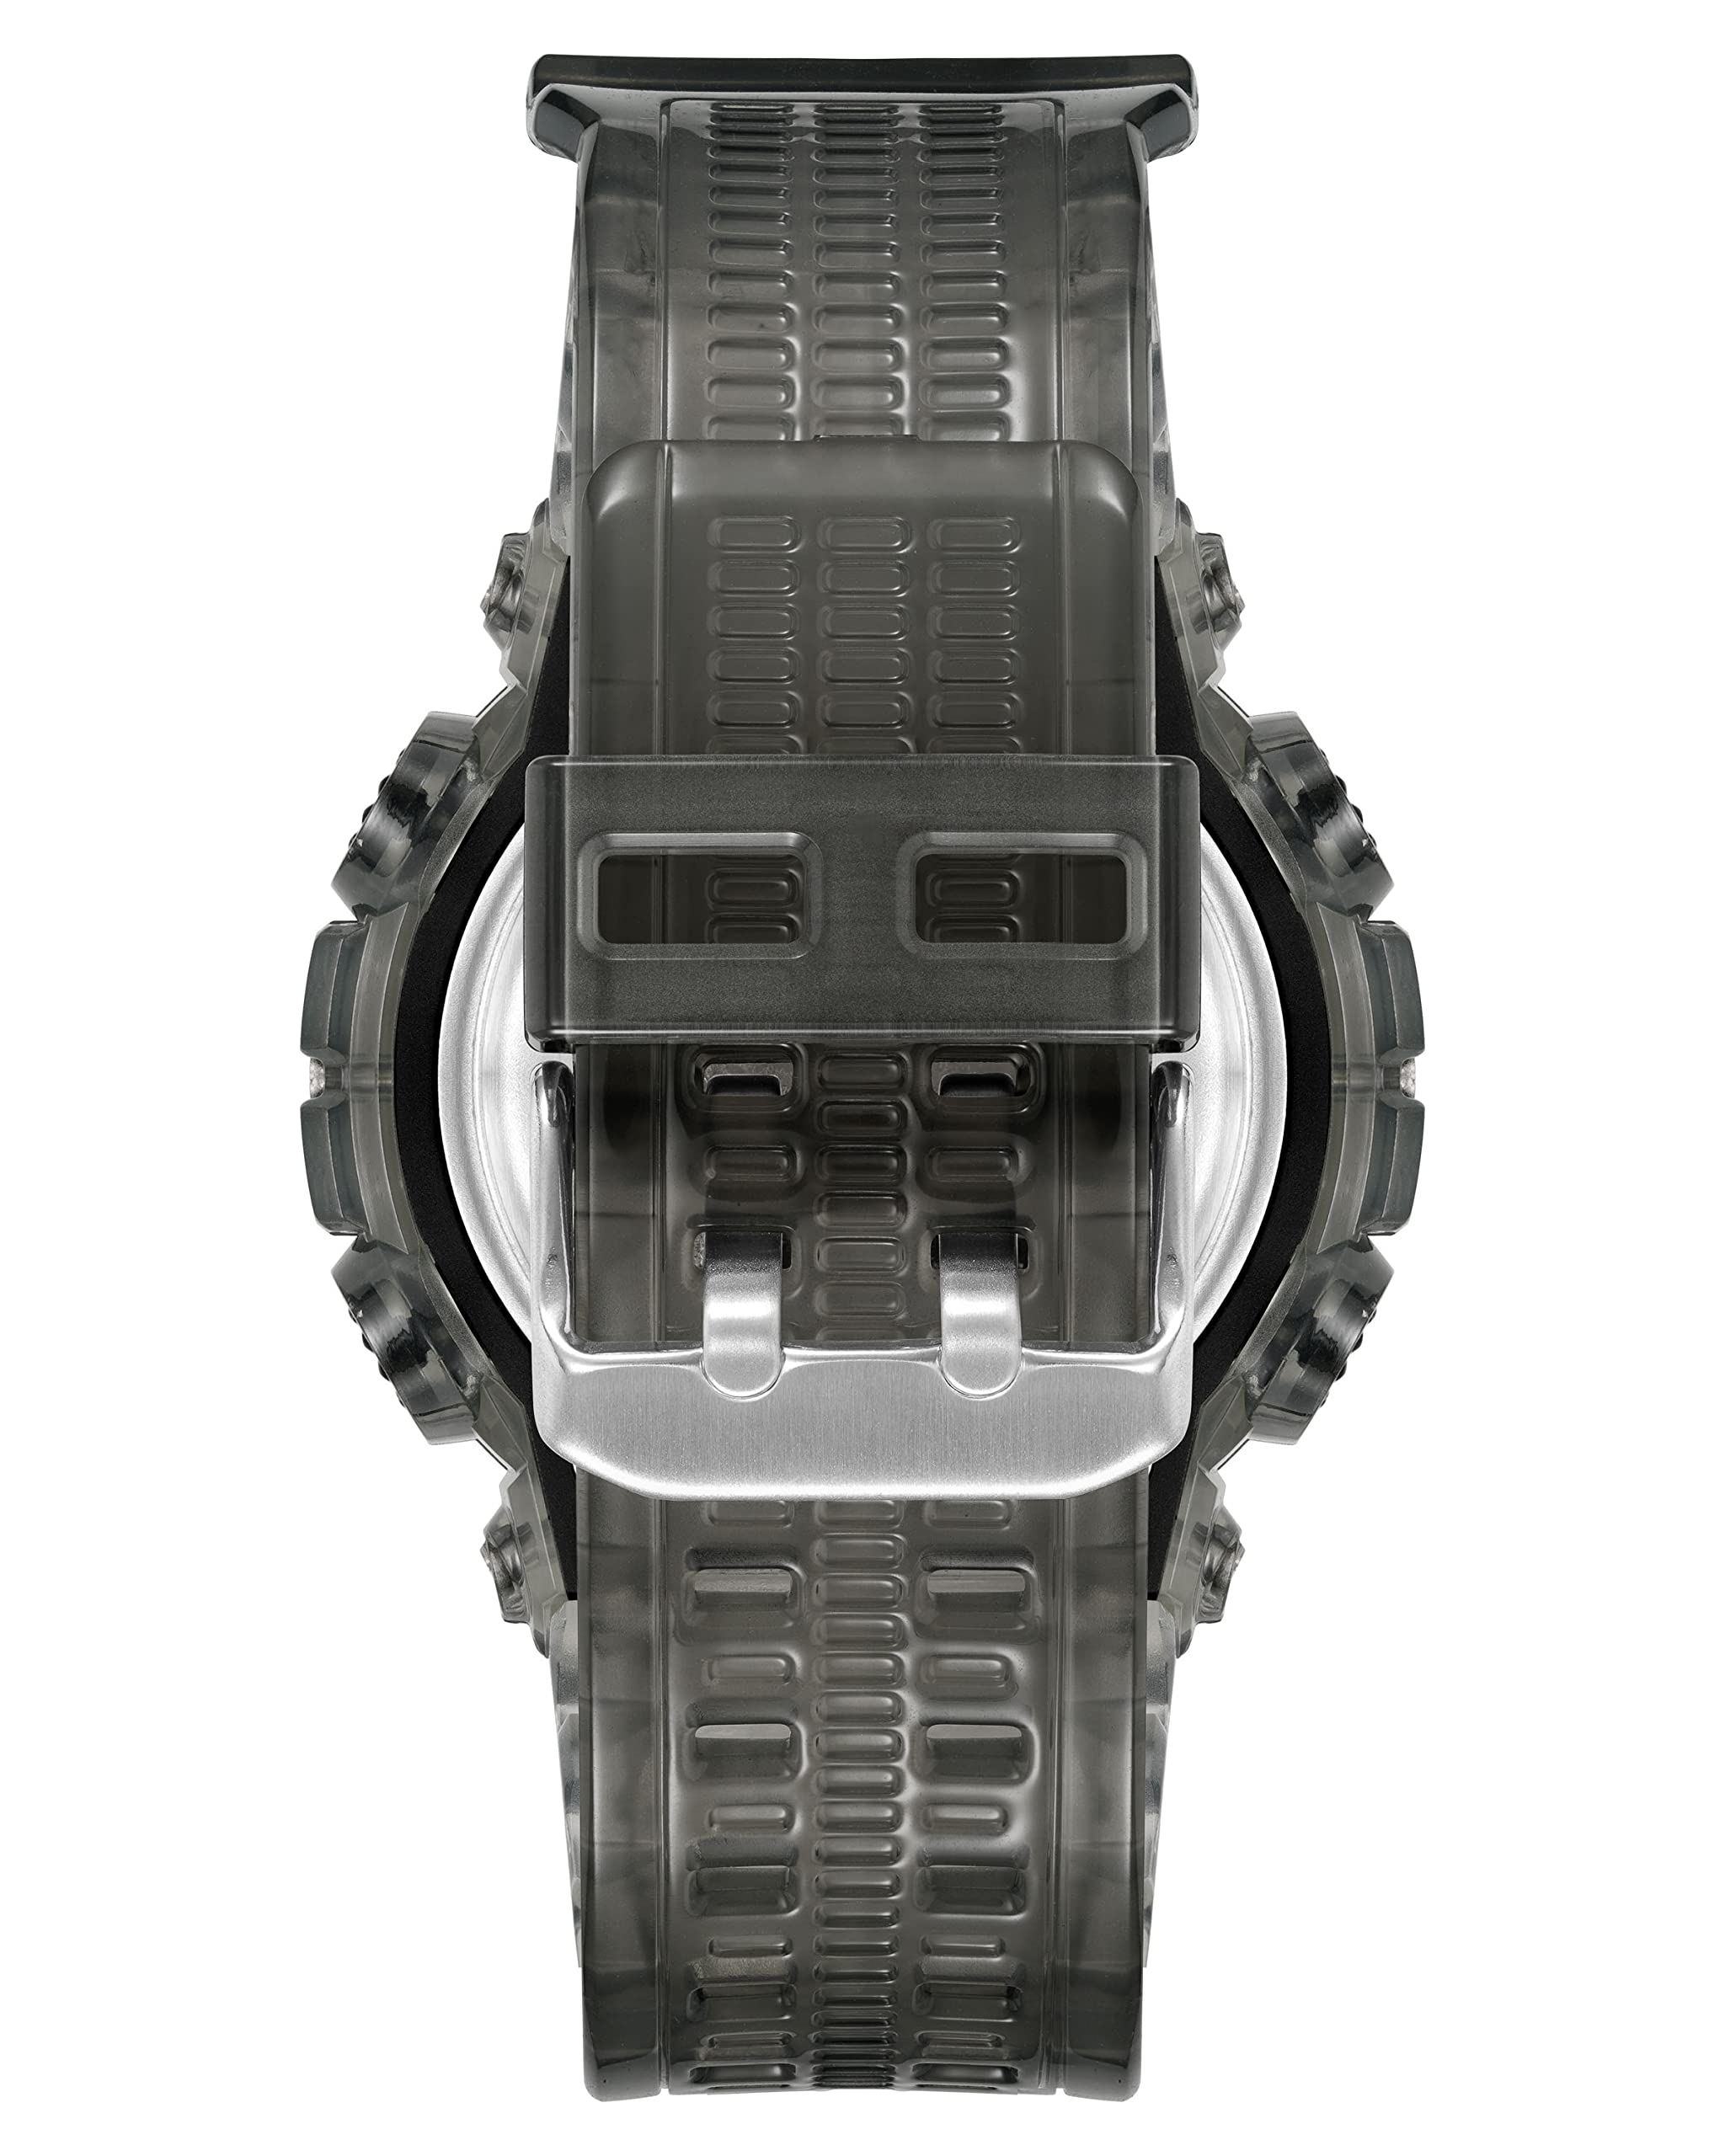 Armitron Sport Men's Analog-Digital Resin Strap Watch, 20/5445